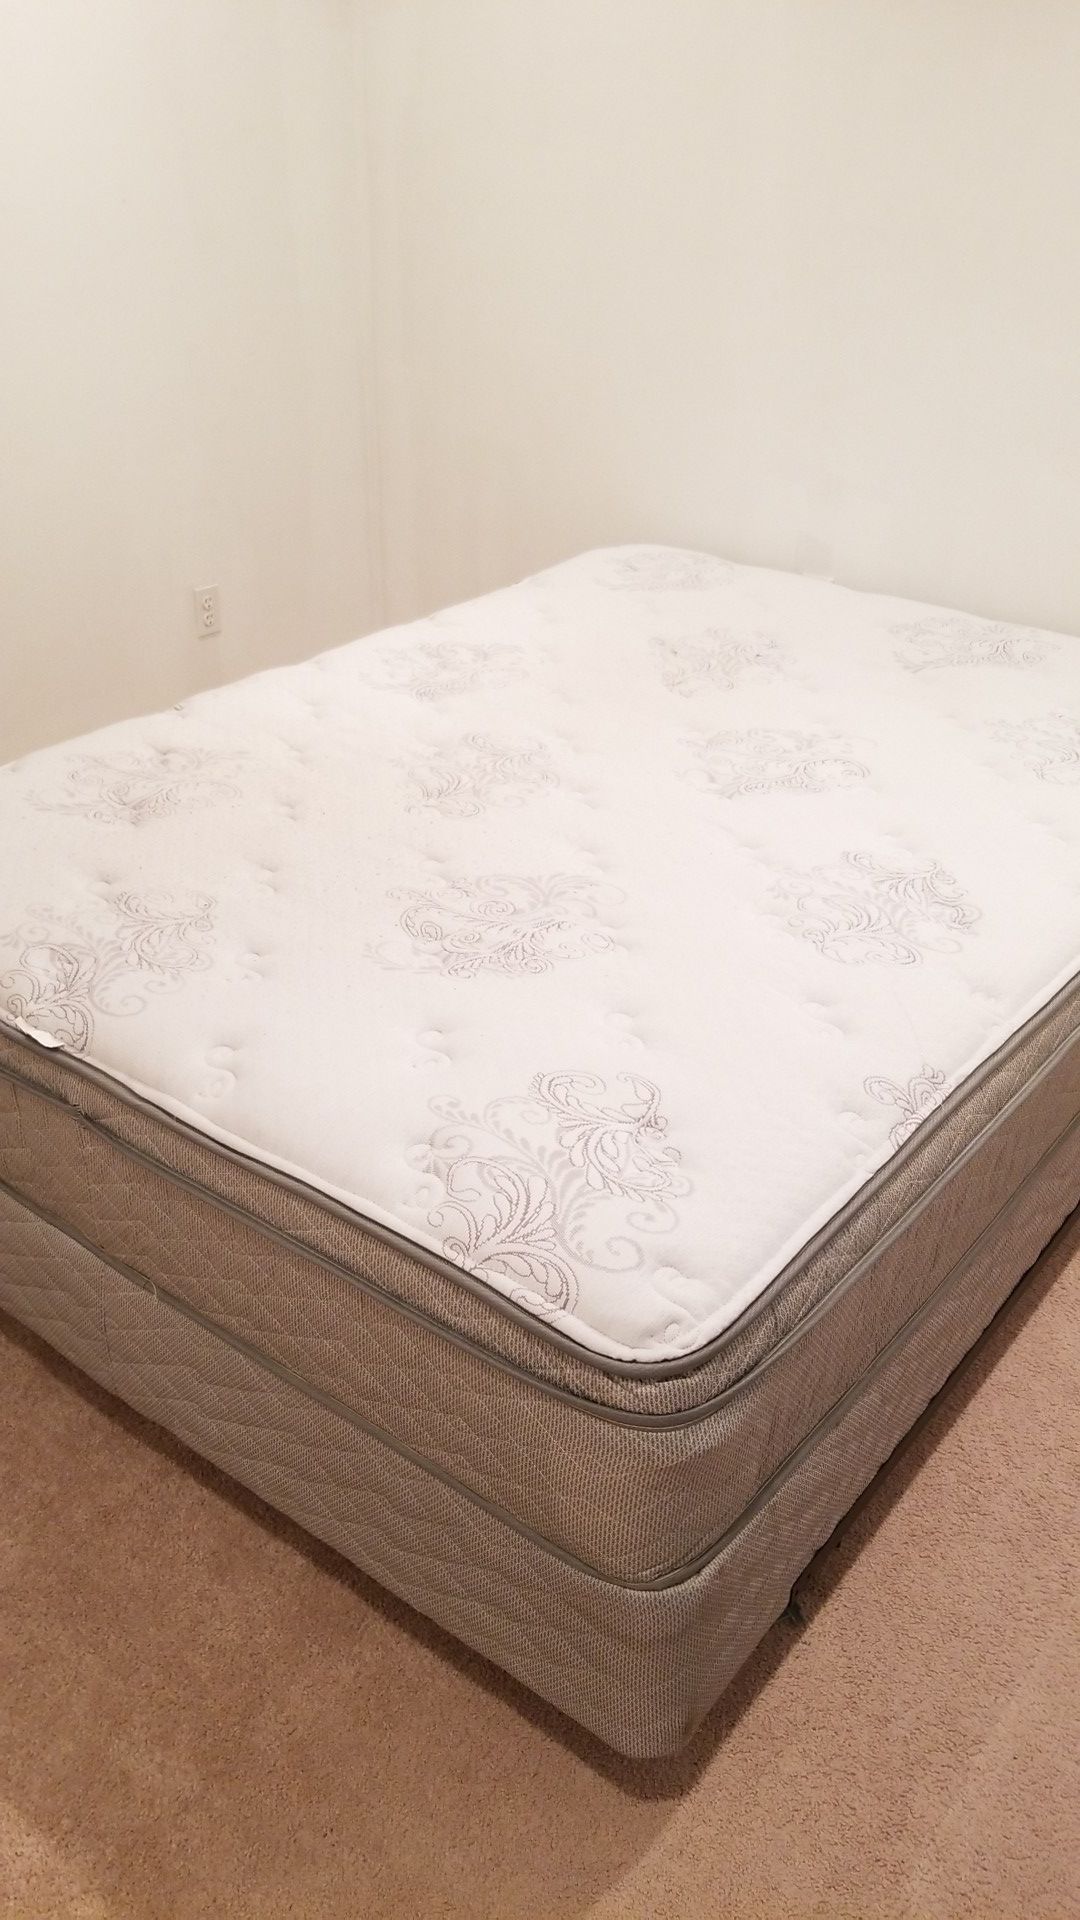 Serta full size mattress and box spring